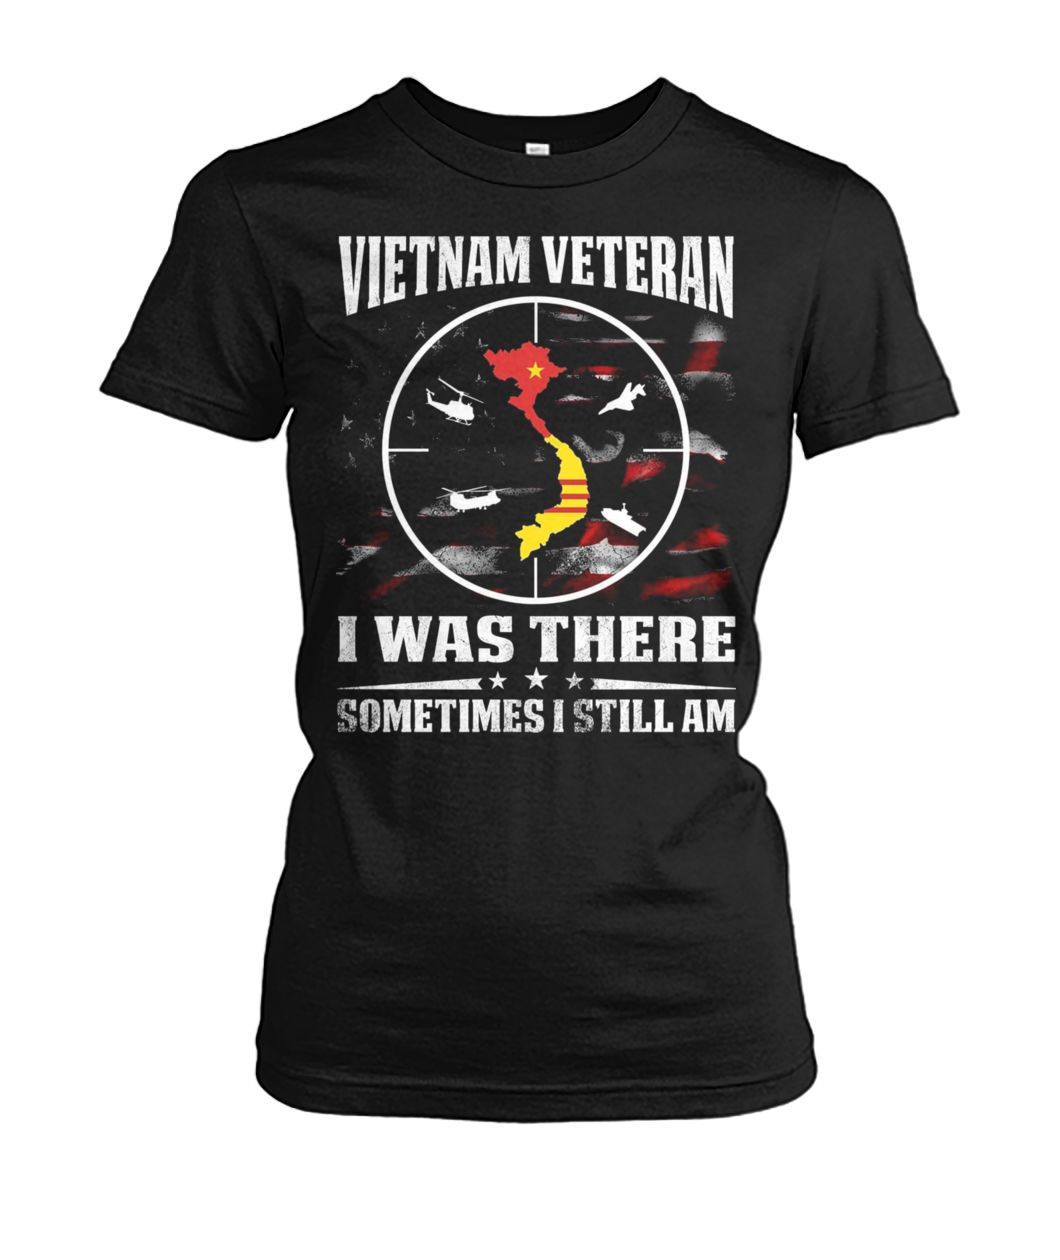 Vietnam veteran I was there sometimes I still am women's crew tee